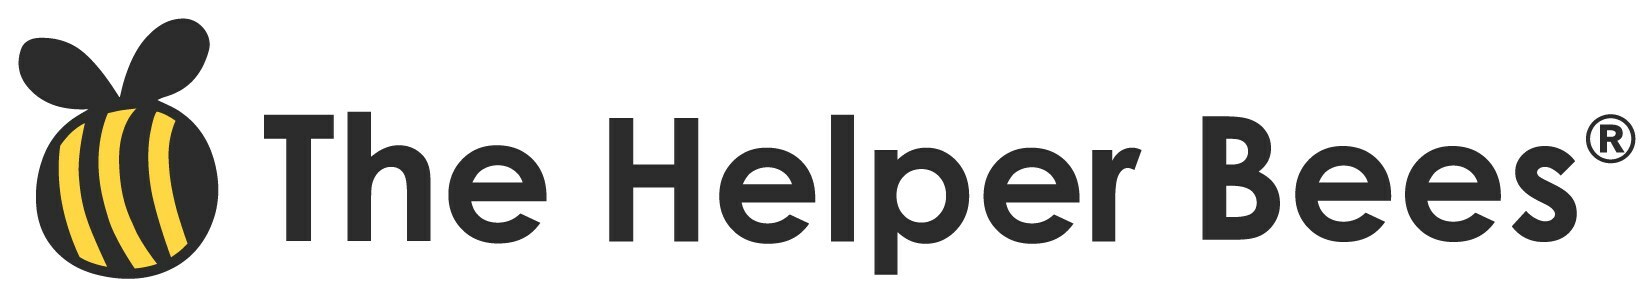 The Helper Bees Logo (PRNewsfoto/The Helper Bees)